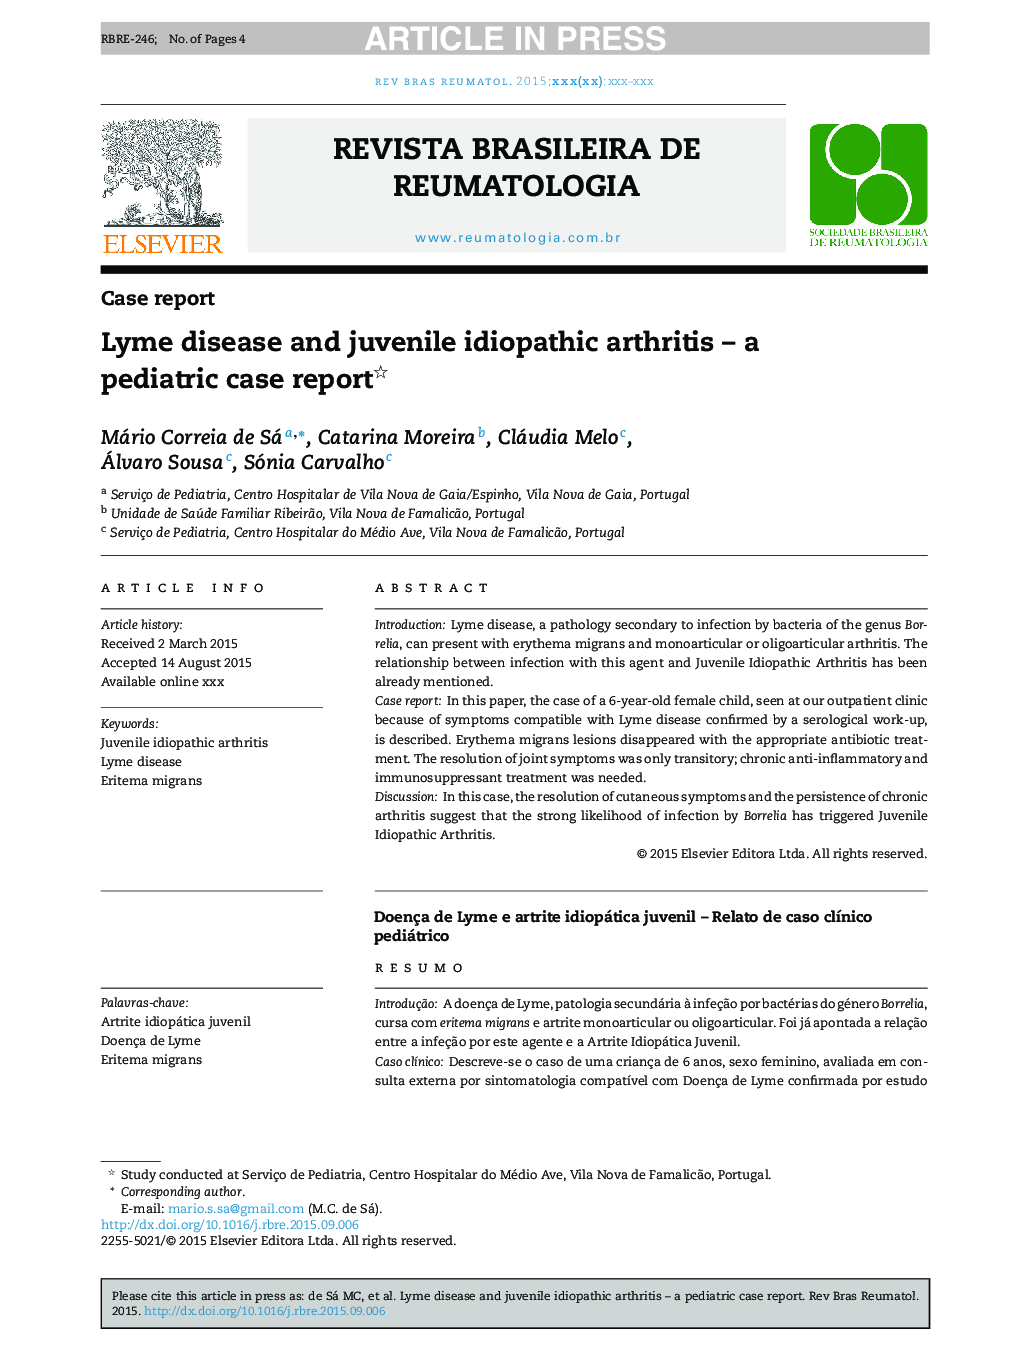 Lyme disease and juvenile idiopathic arthritis - A pediatric case report